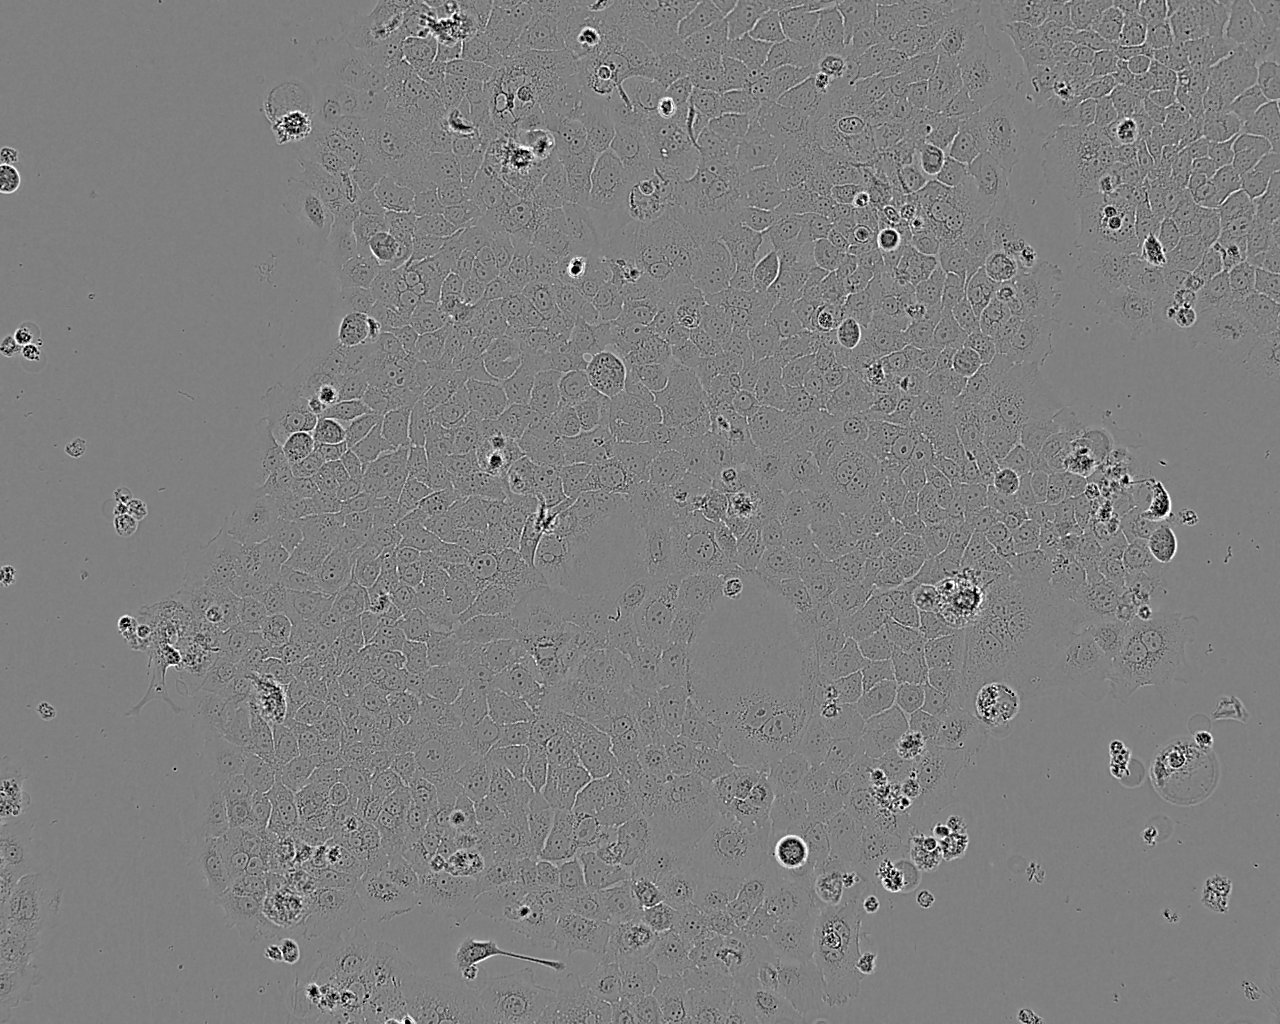 Lec1 epithelioid cells仓鼠卵巢细胞系,Lec1 epithelioid cells